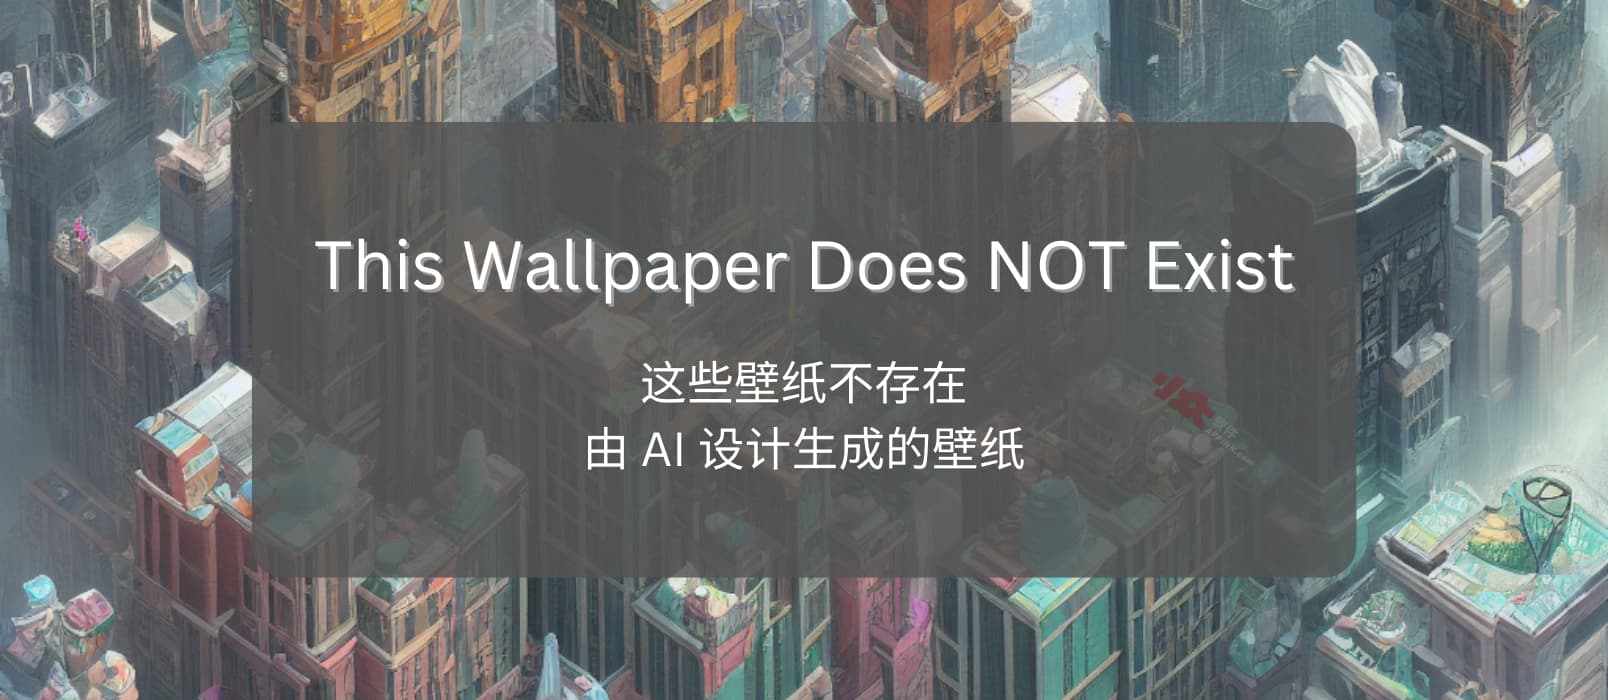 This Wallpaper Does NOT Exist - 这些壁纸不存在。由 AI 设计生成的壁纸 1